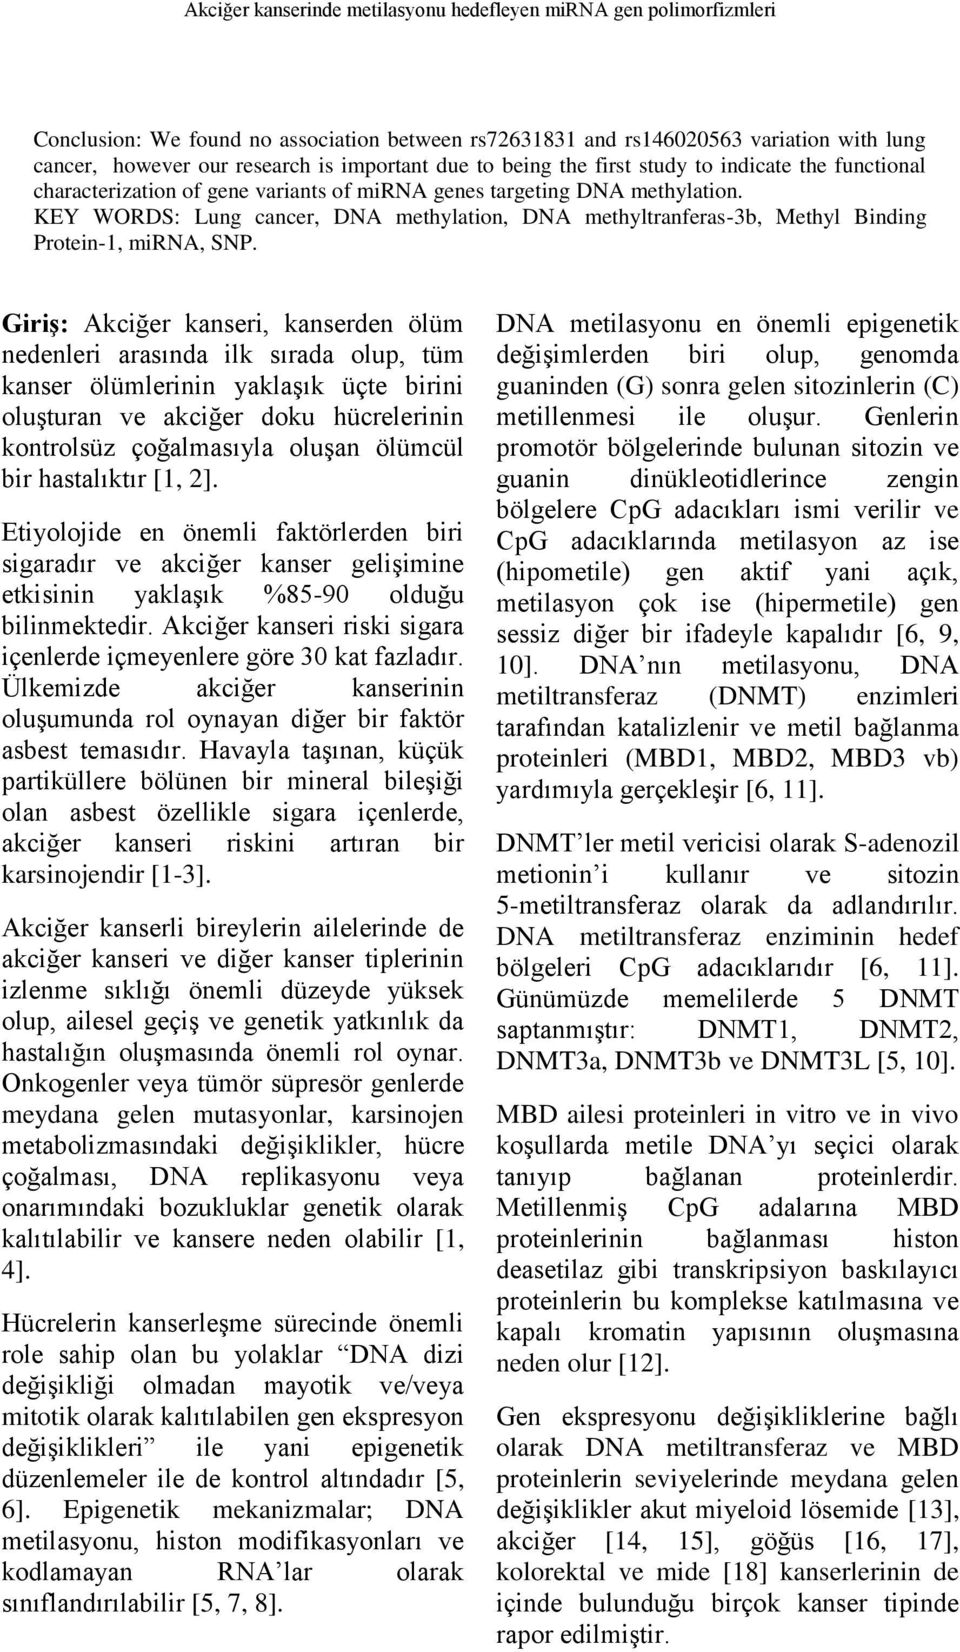 KEY WORDS: Lung cancer, DNA methylation, DNA methyltranferas-3b, Methyl Binding Protein-1, mirna, SNP.